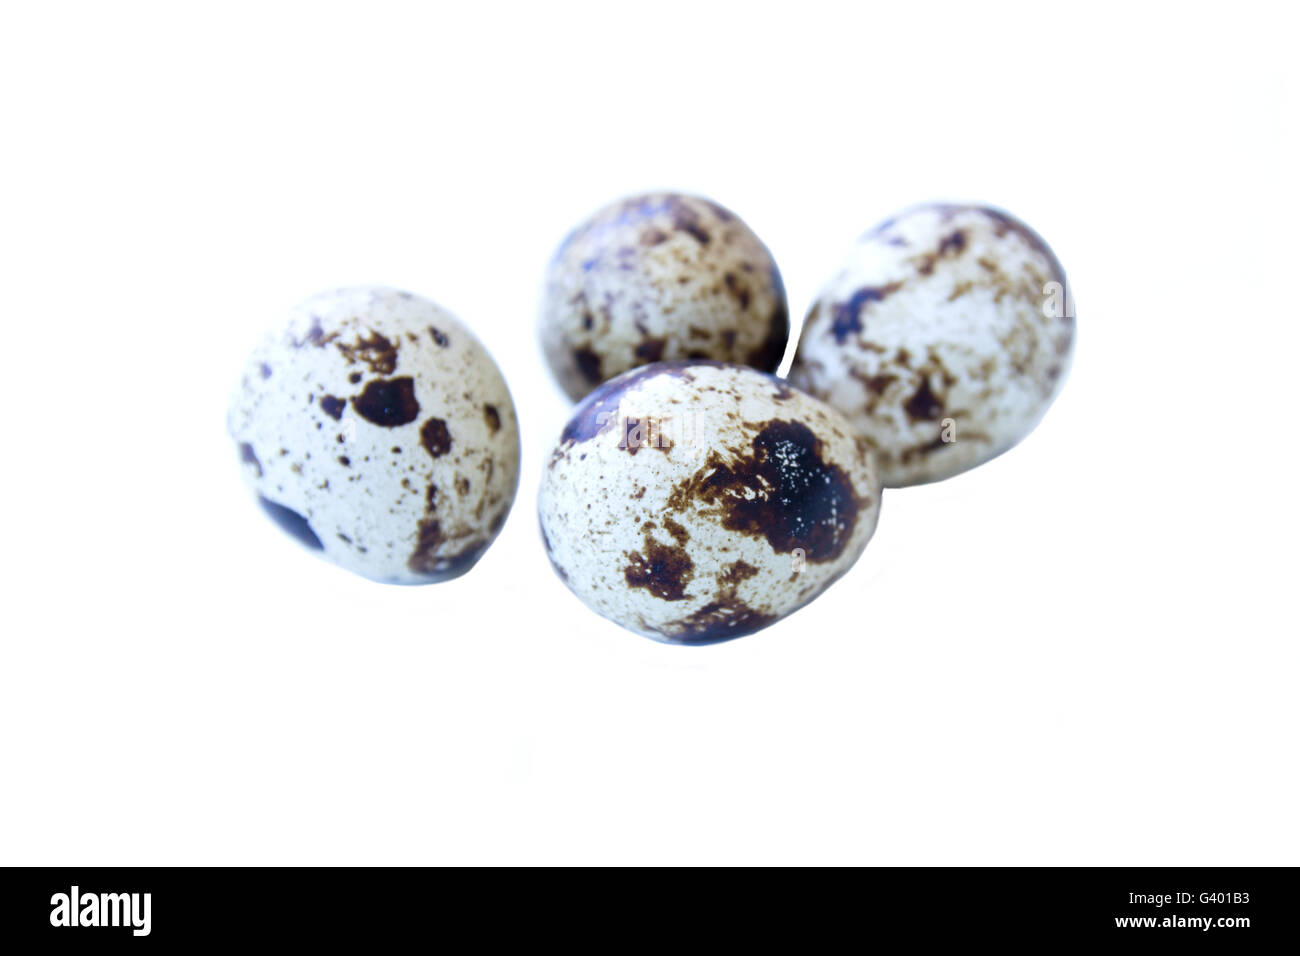 Some quail eggs on a white background Stock Photo